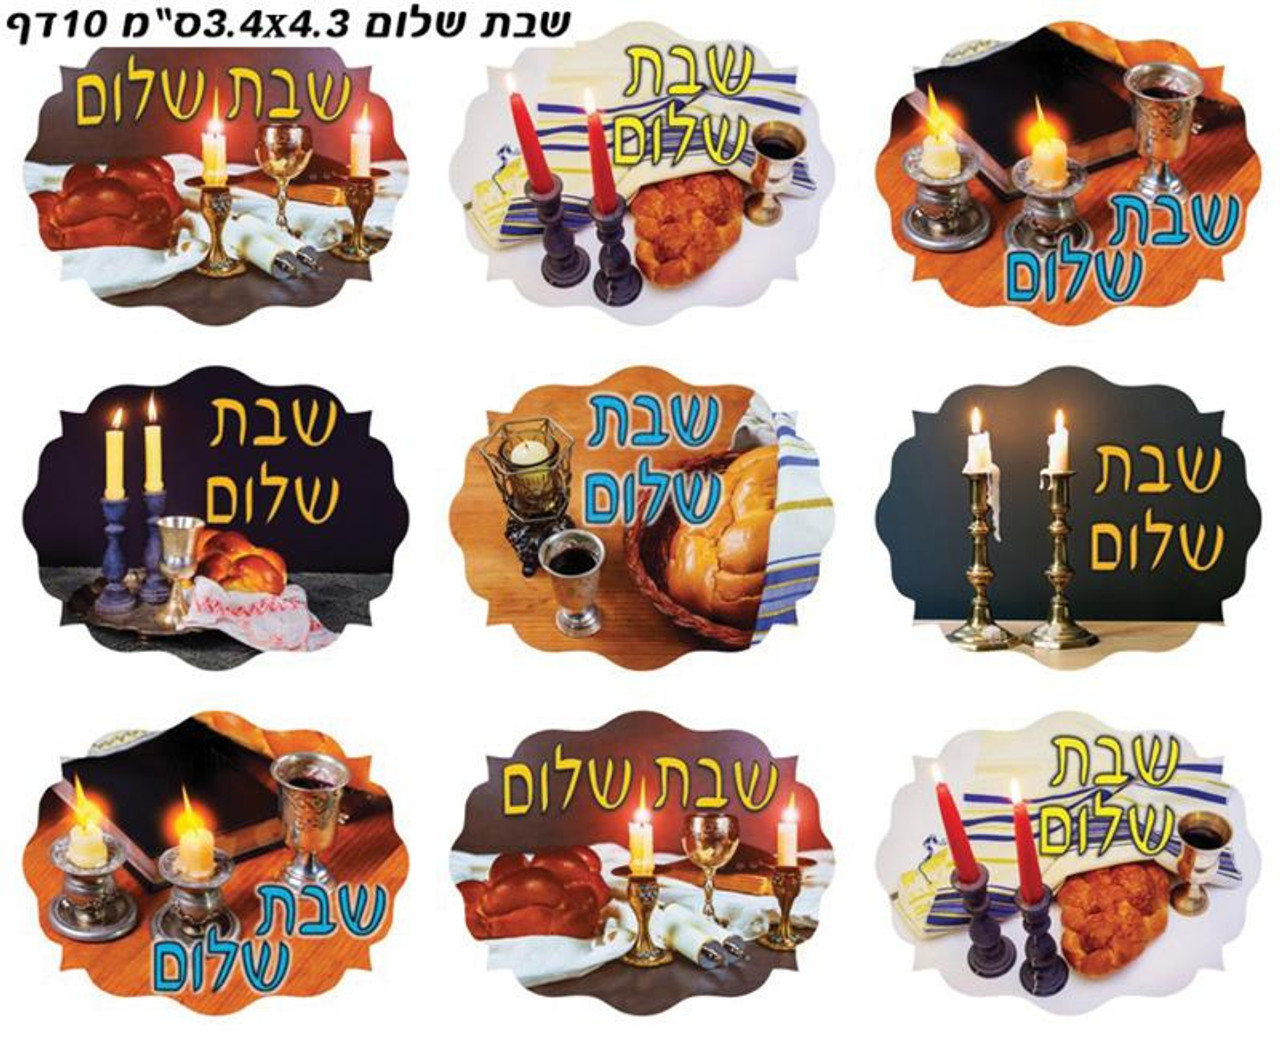 Shalom, Israel' Sticker